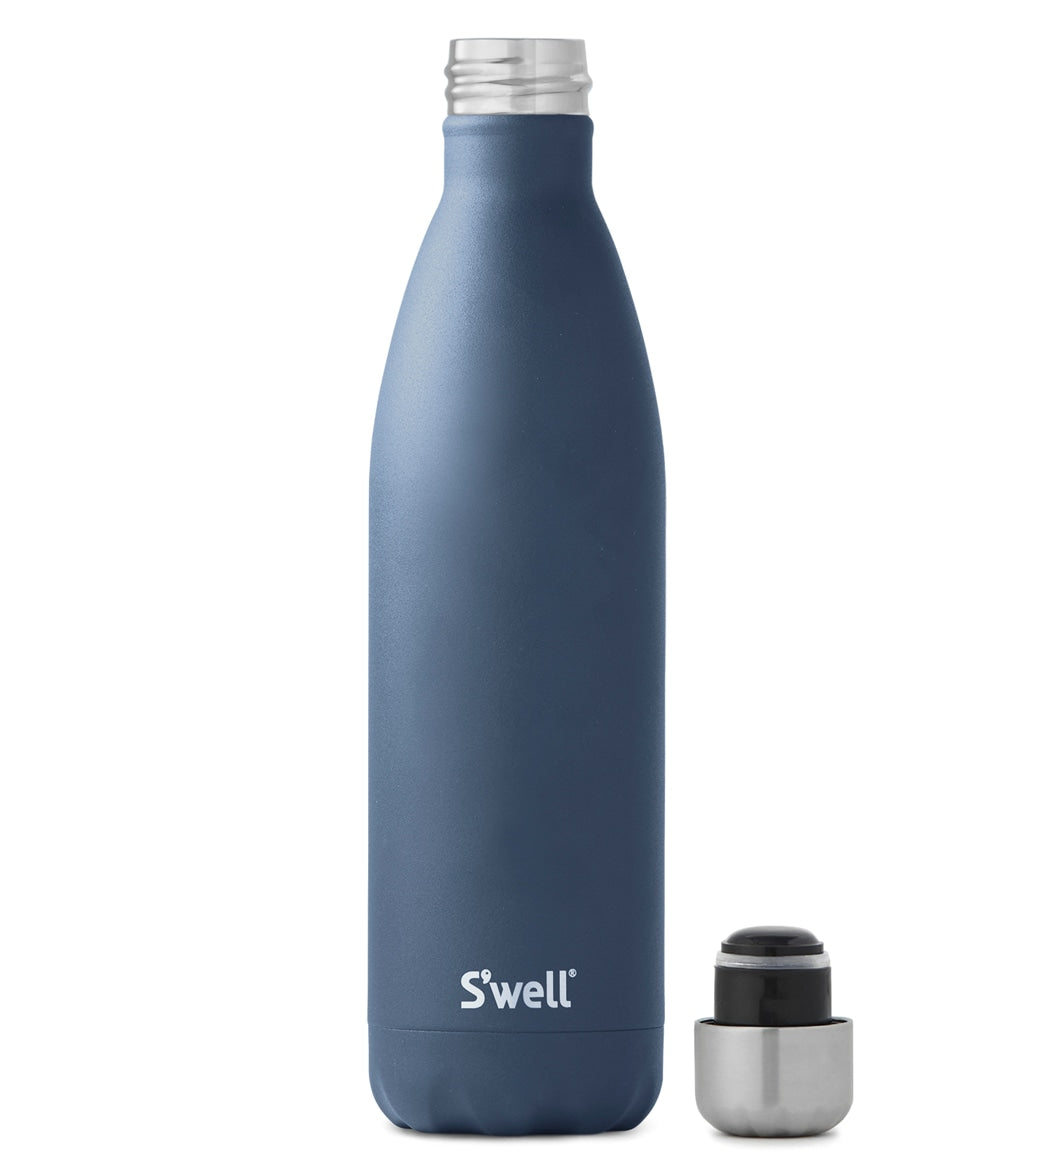  S'well Stainless Steel Water Bottle - 25 Fl Oz - Blue